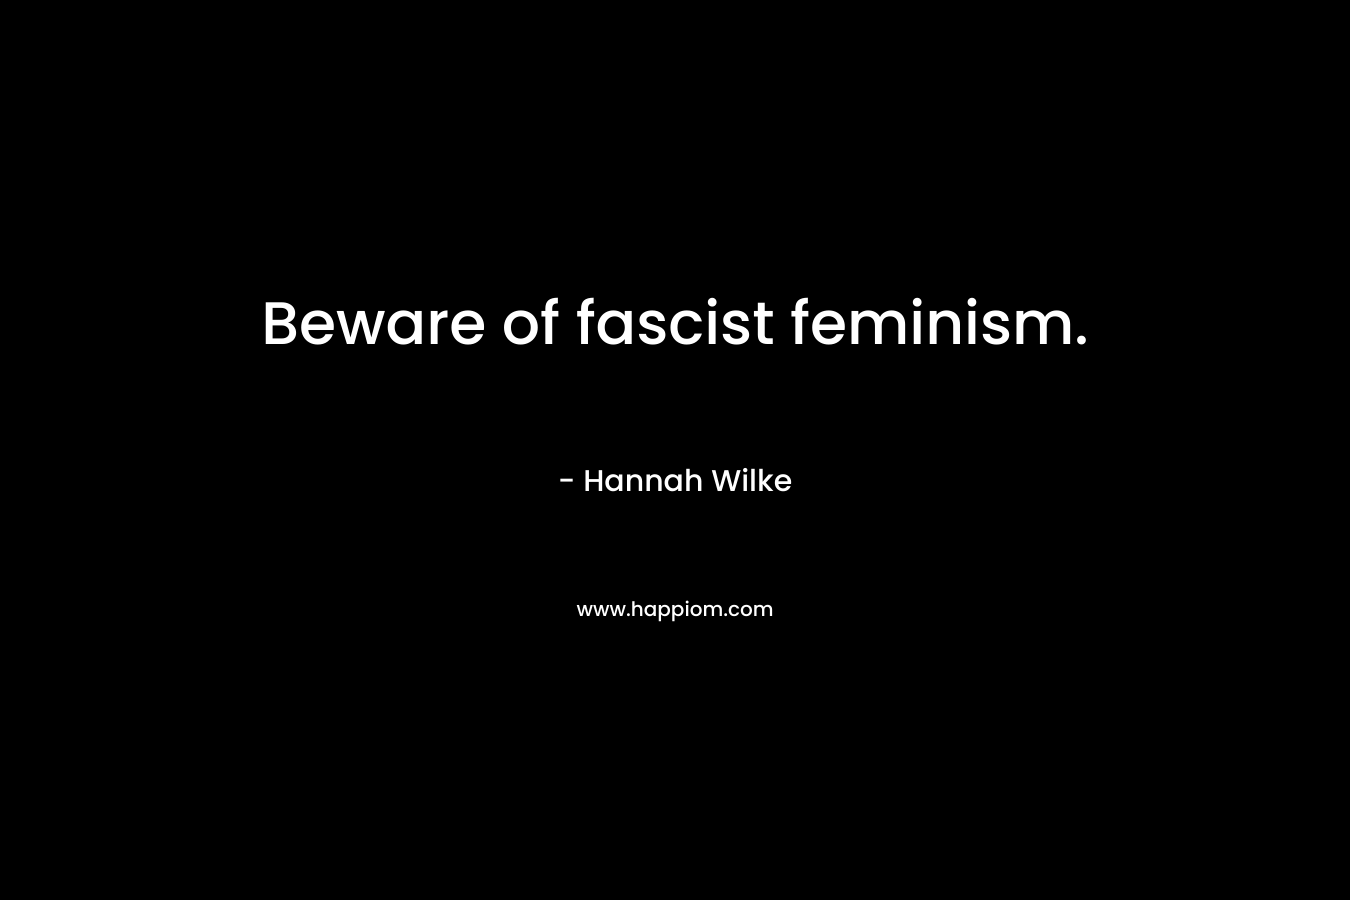 Beware of fascist feminism.